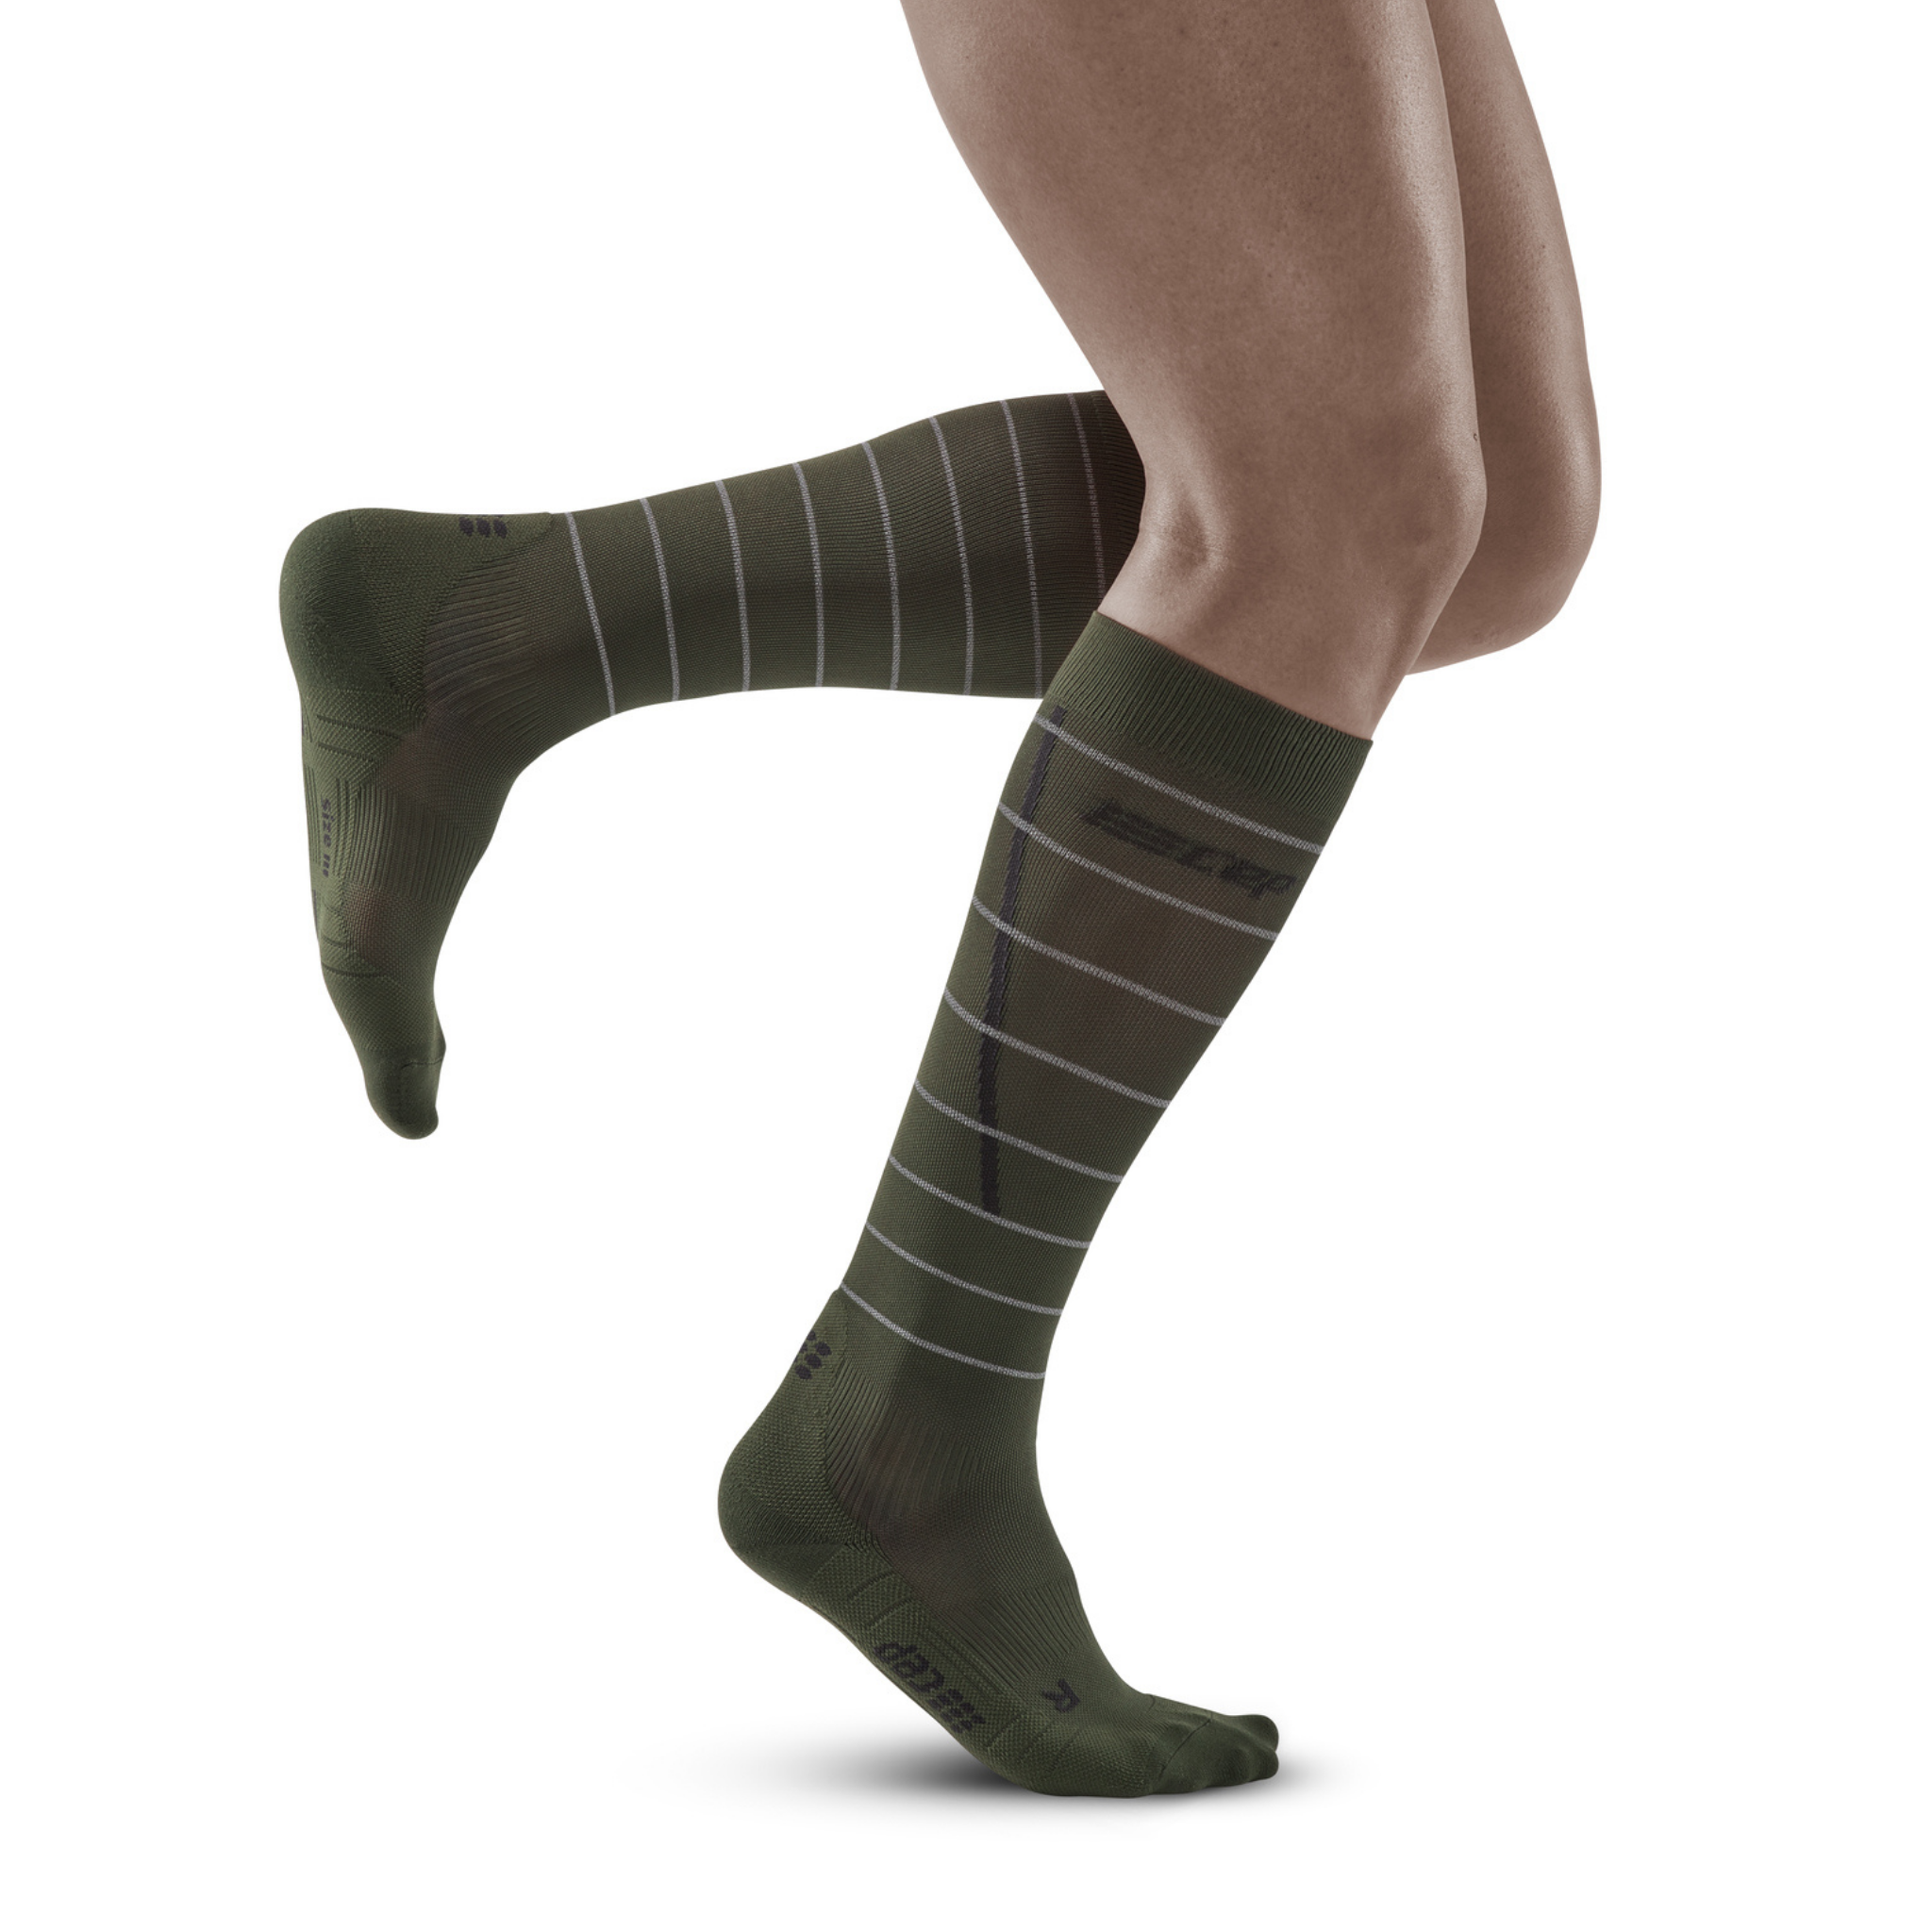 CEP Men's, CEP Reflective Tall Compression Socks